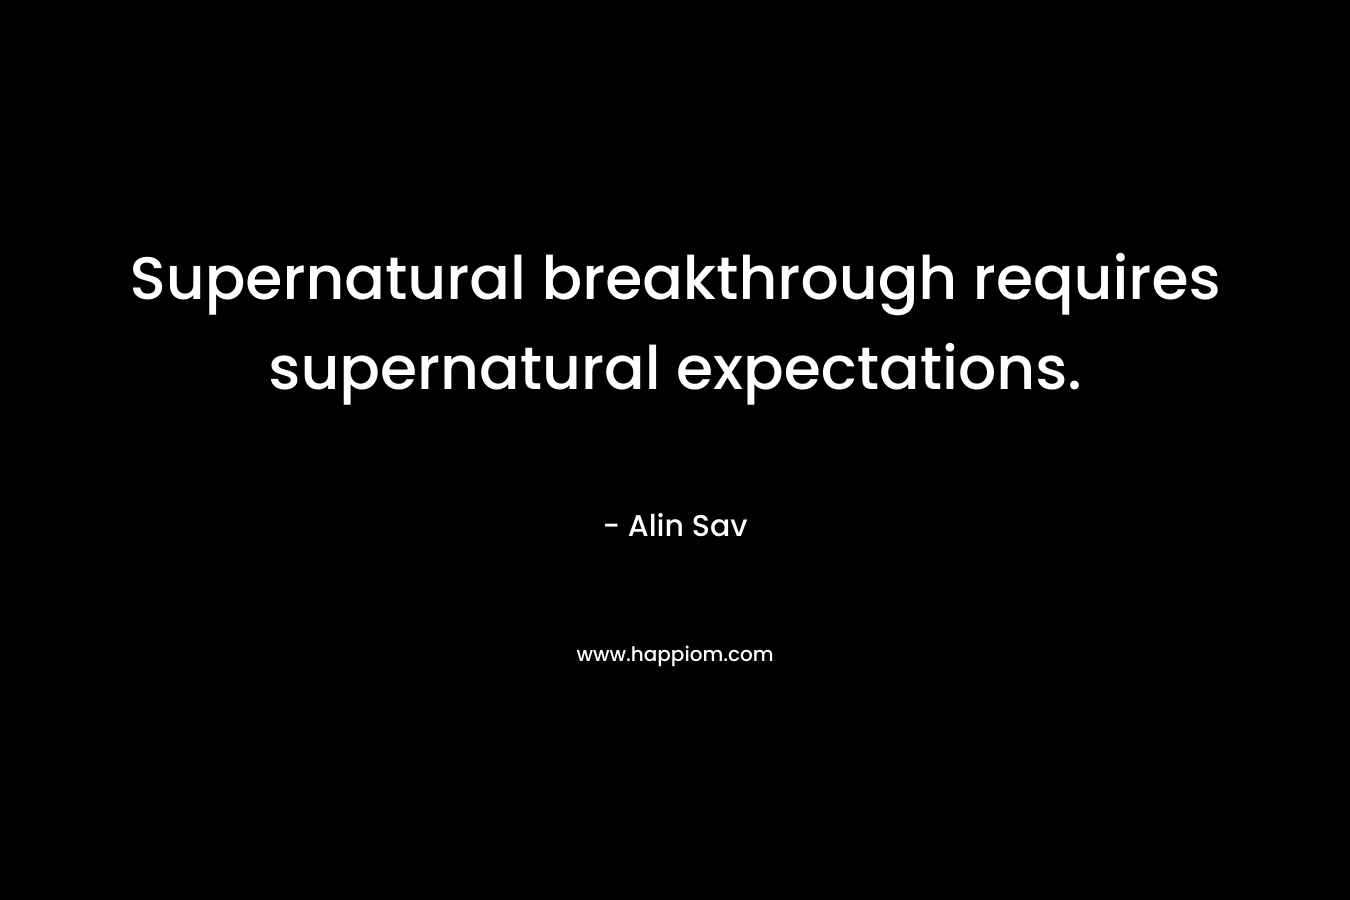 Supernatural breakthrough requires supernatural expectations.